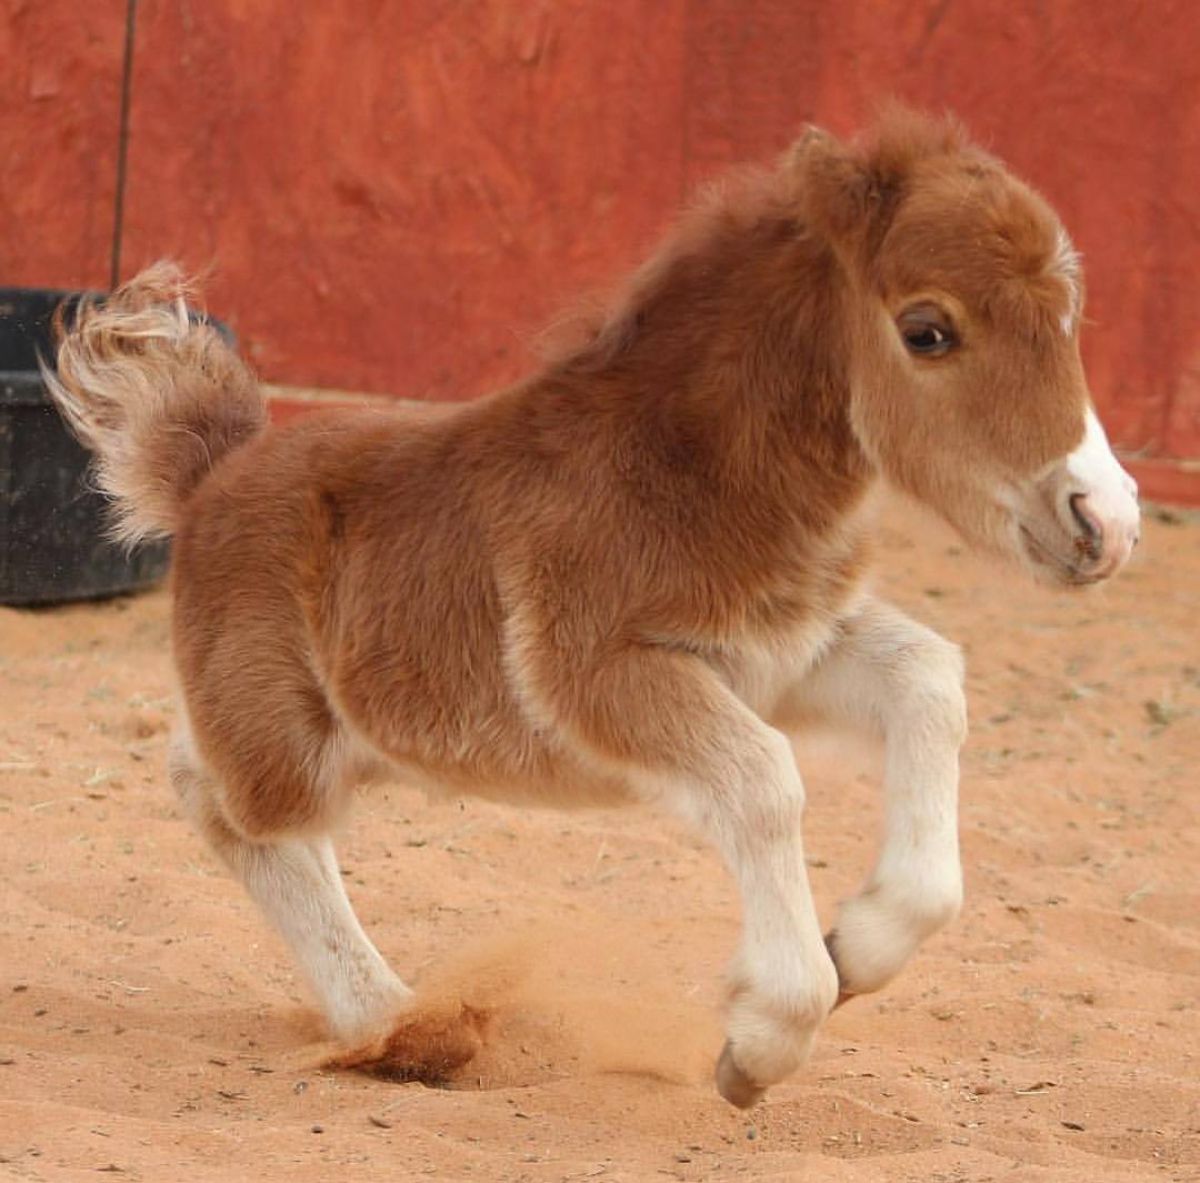 An adorable brown pony runs on a sandy ground.